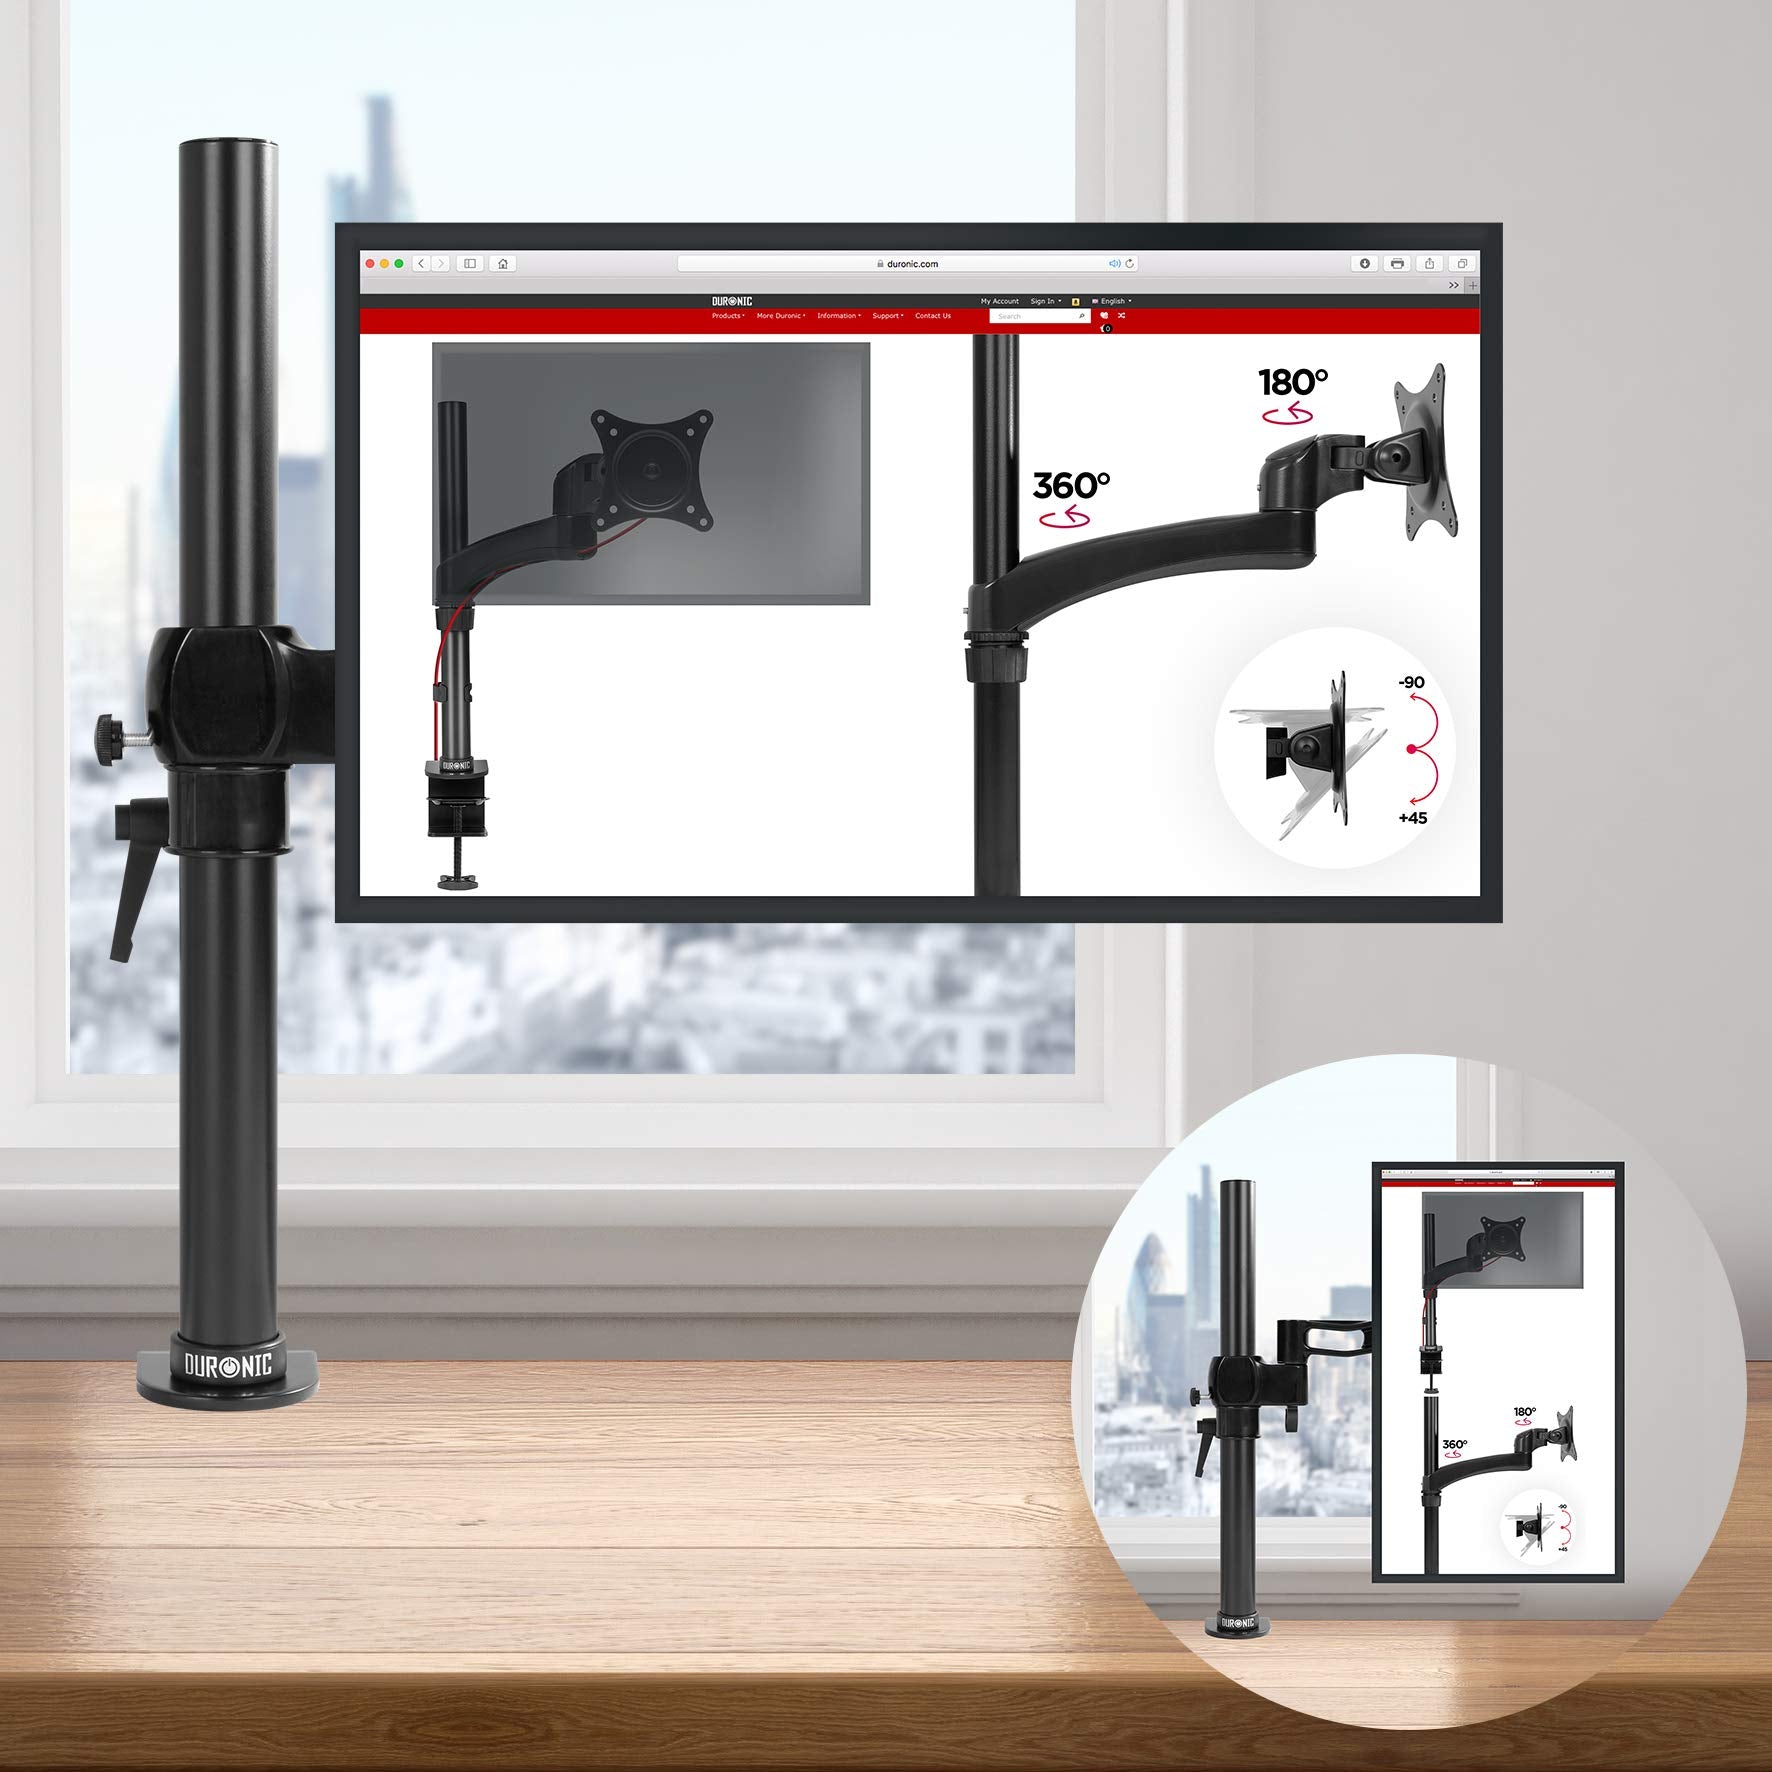 Duronic Single Monitor Arm Stand DM351X2 | Single PC Desk Mount | BLACK | Aluminium | Adjustable | For One 13-27 LED LCD Screen | VESA 75/100 | 10kg Capacity | Tilt +15°/-15°,Swivel 180°,Rotate 360°